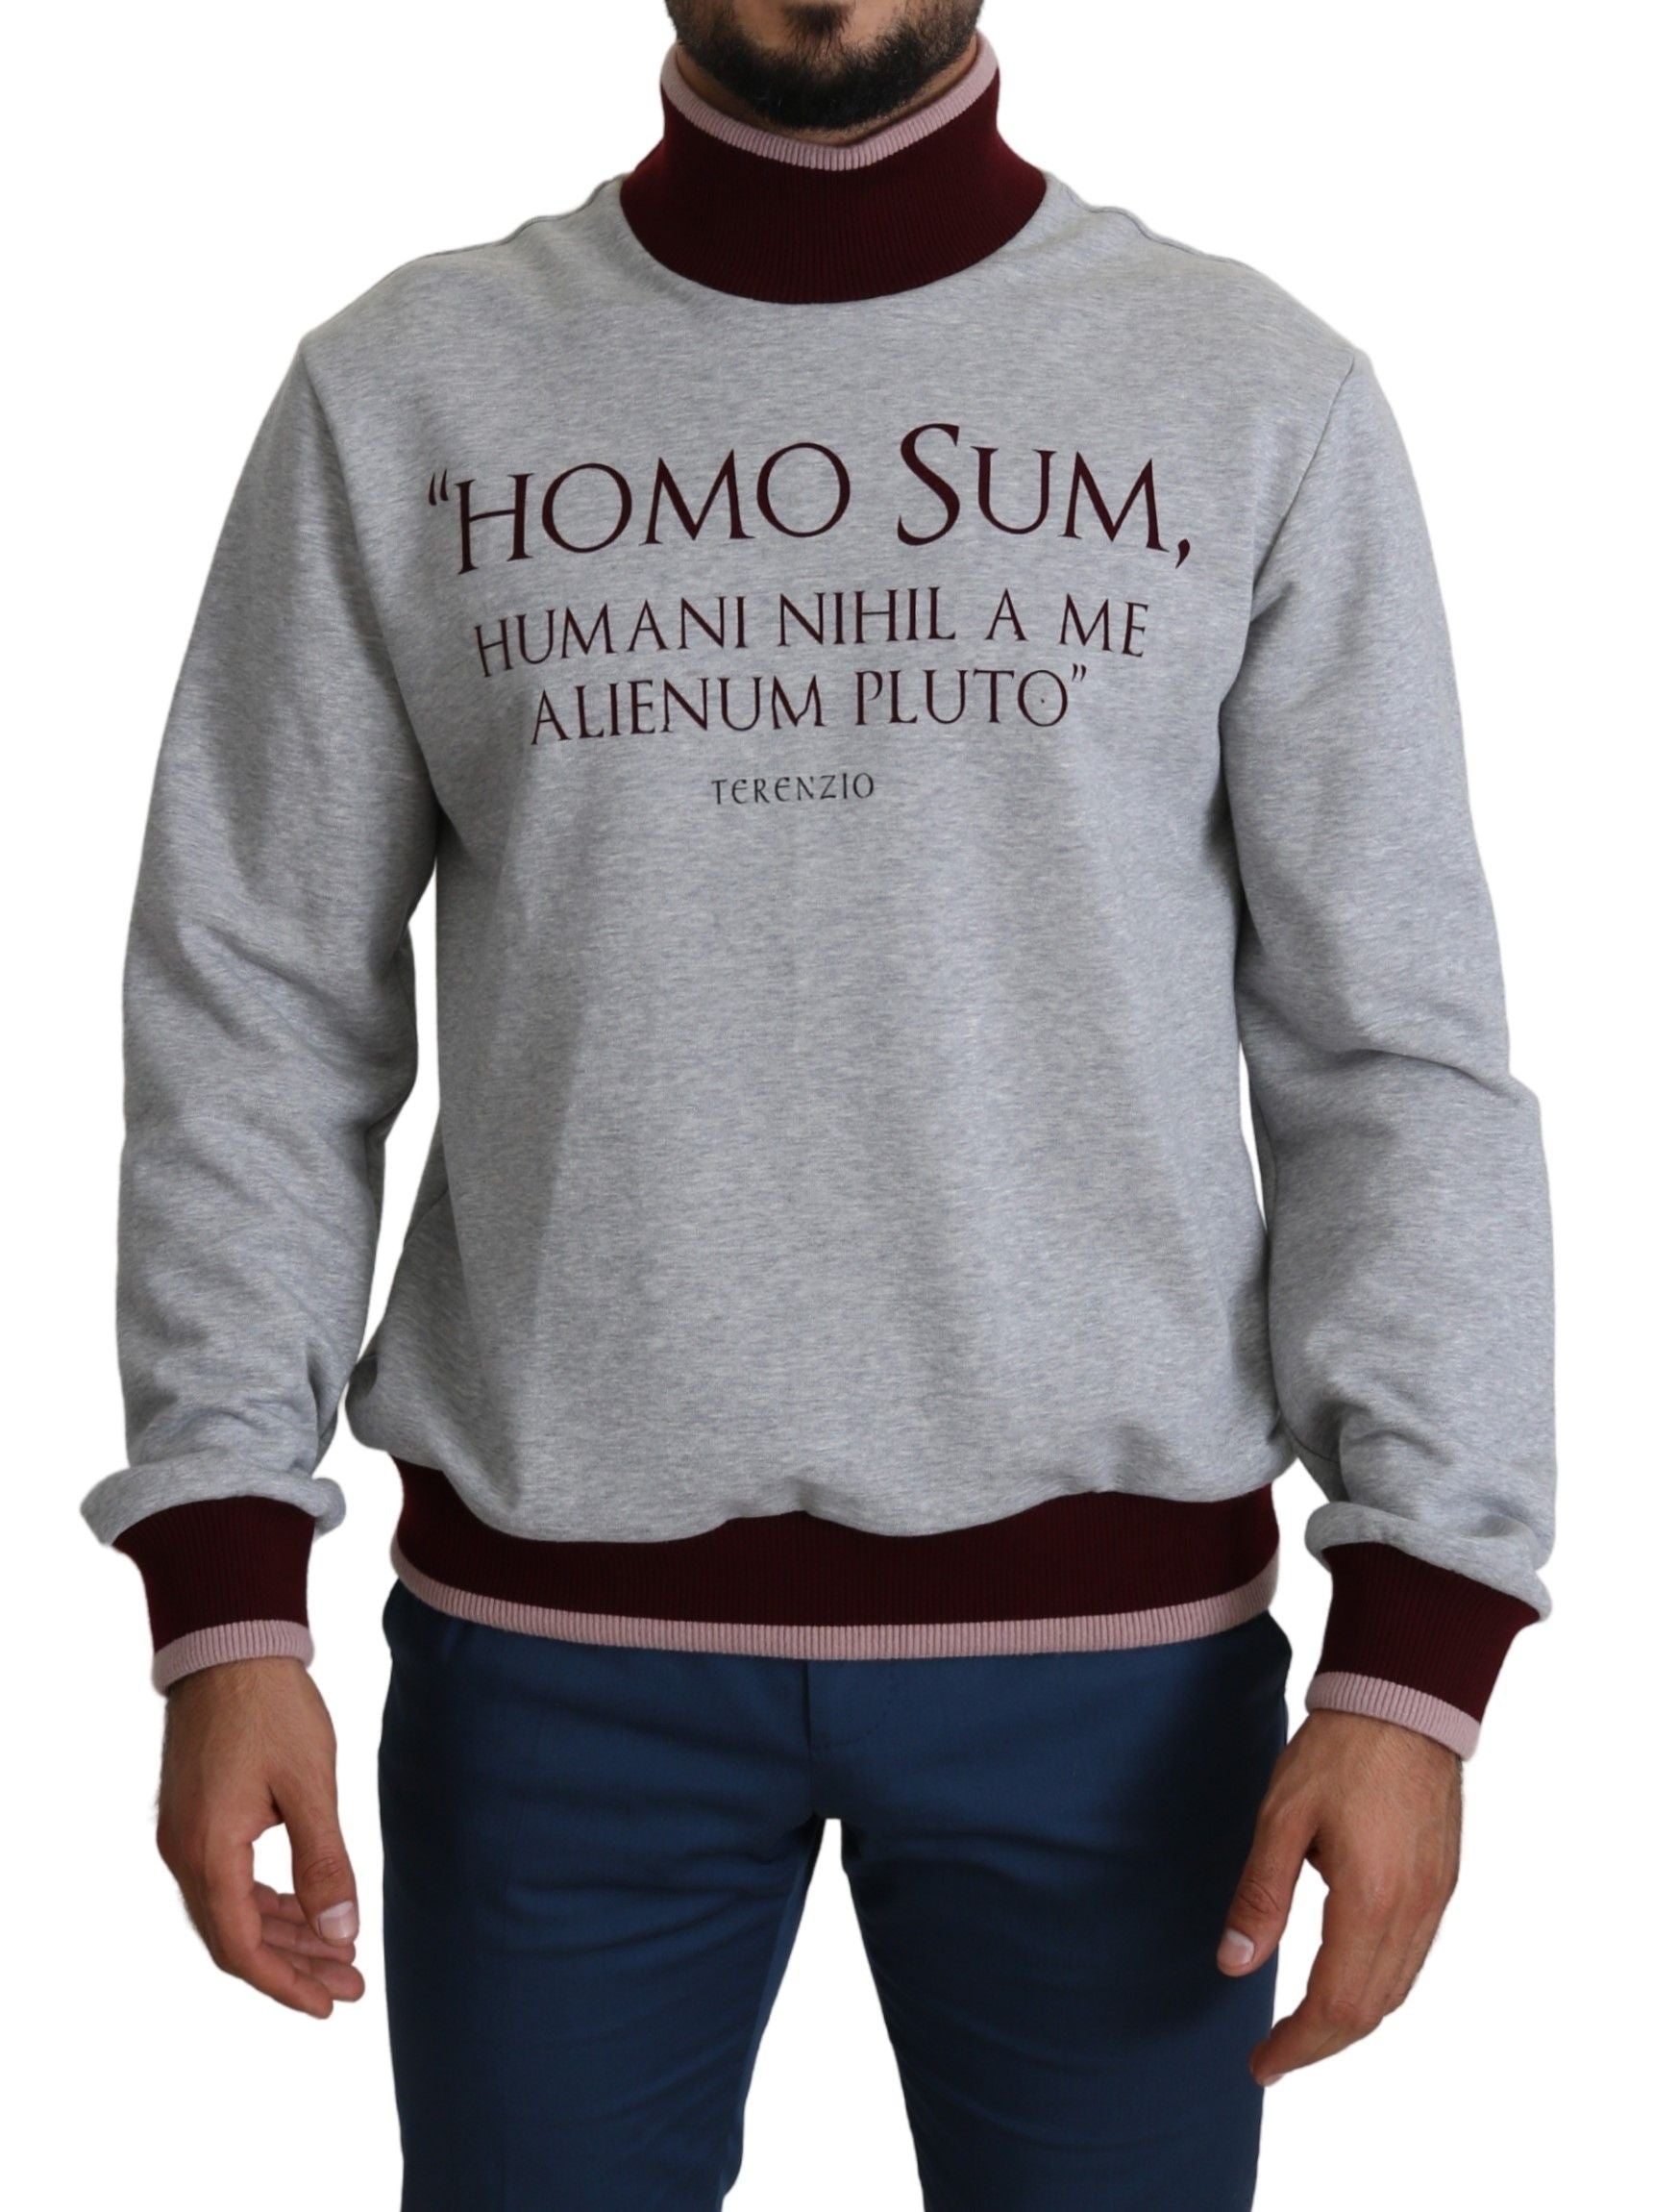 DOLCE & GABBANA Dolce & Gabbana  Homo Sum Turtleneck Pullover Men's Sweater